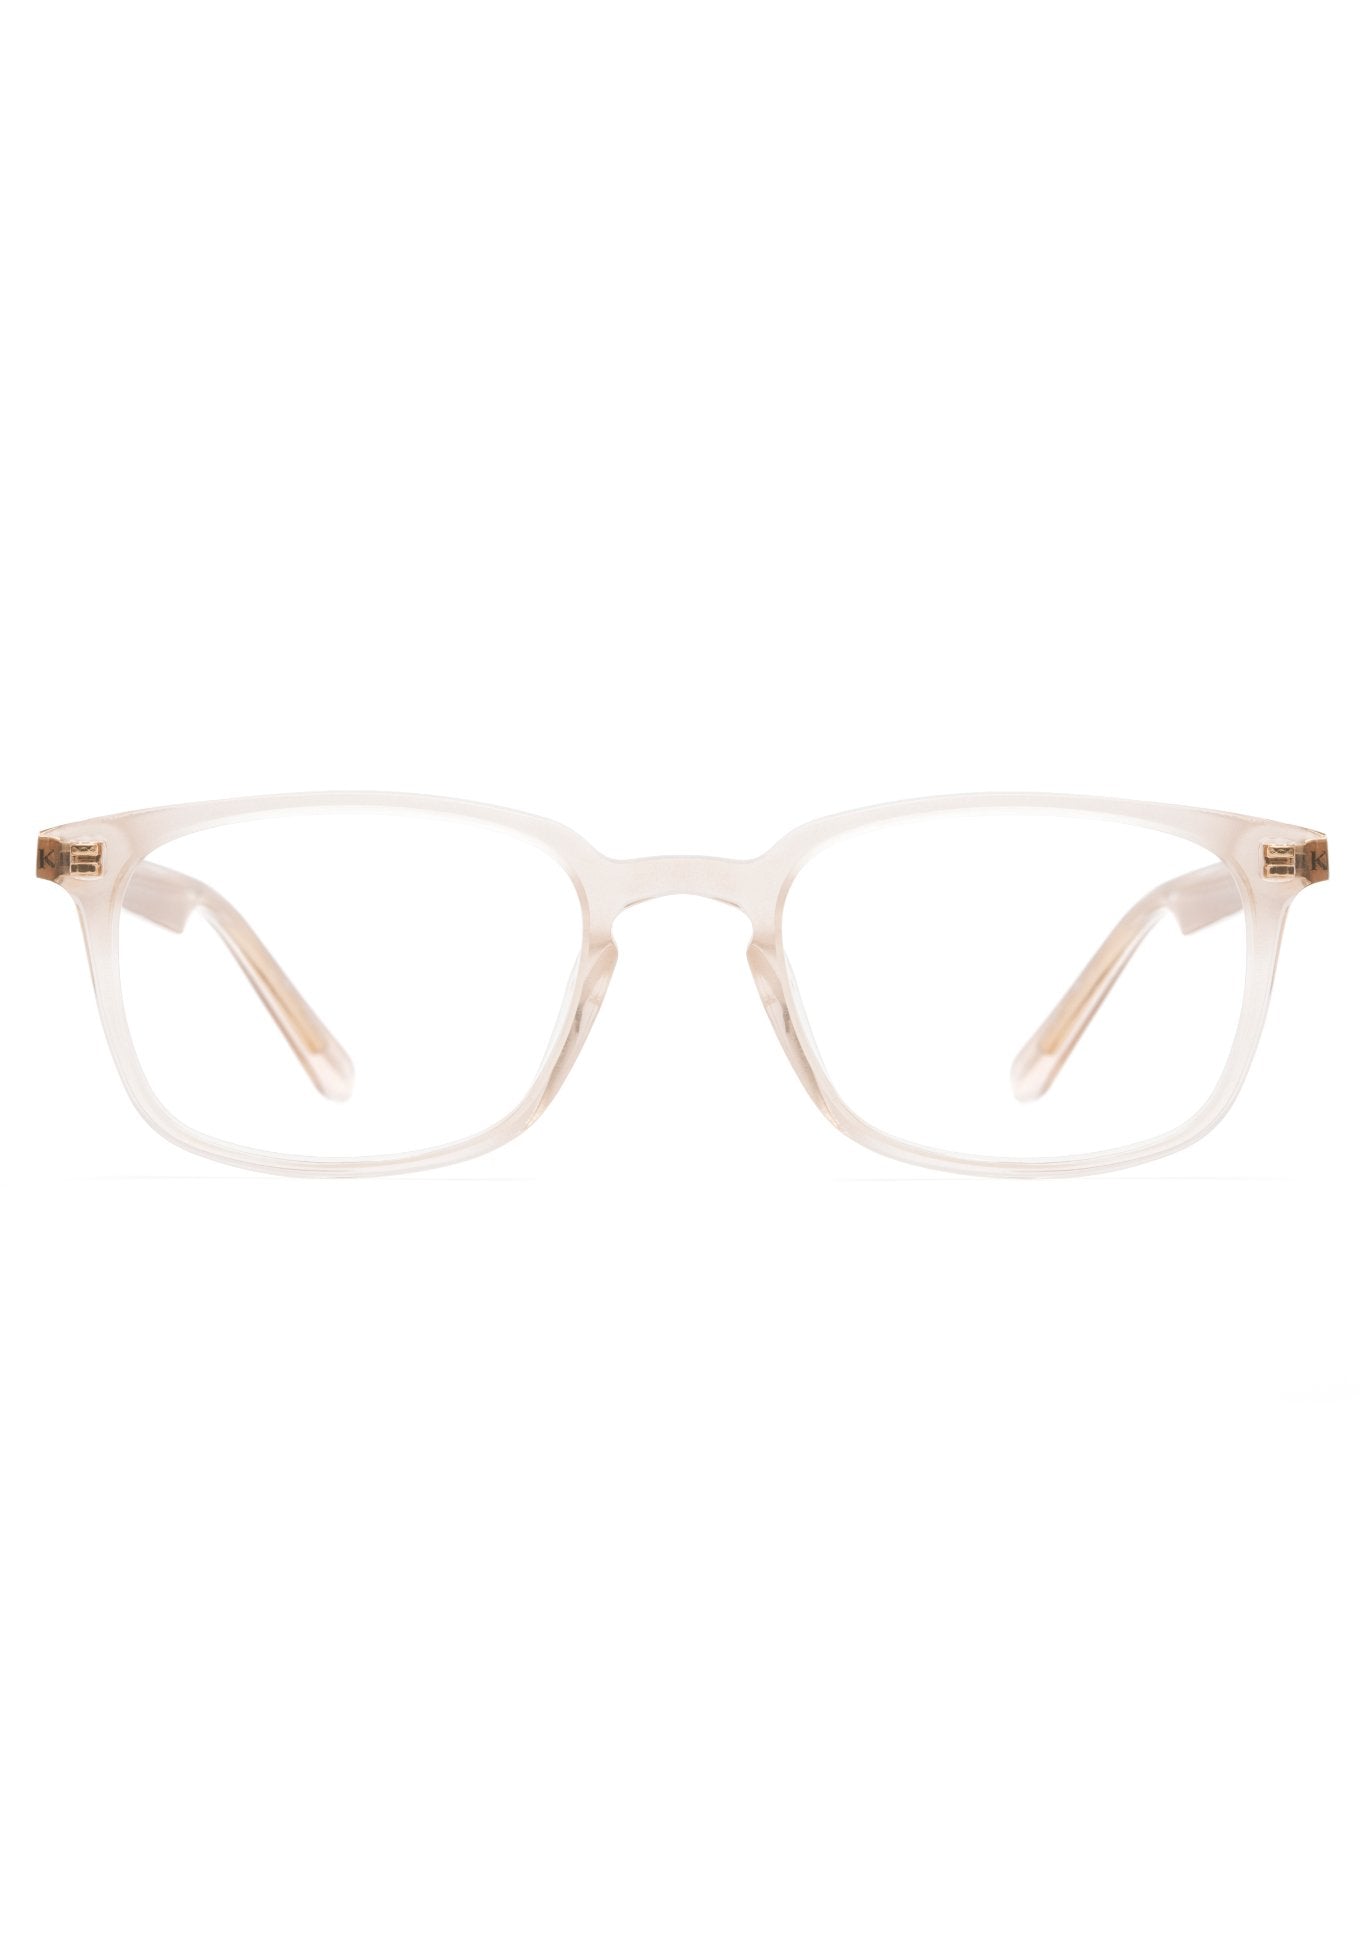 KREWE CARLYLE | Buff Handcrafted, luxury clear acetate eyeglasses